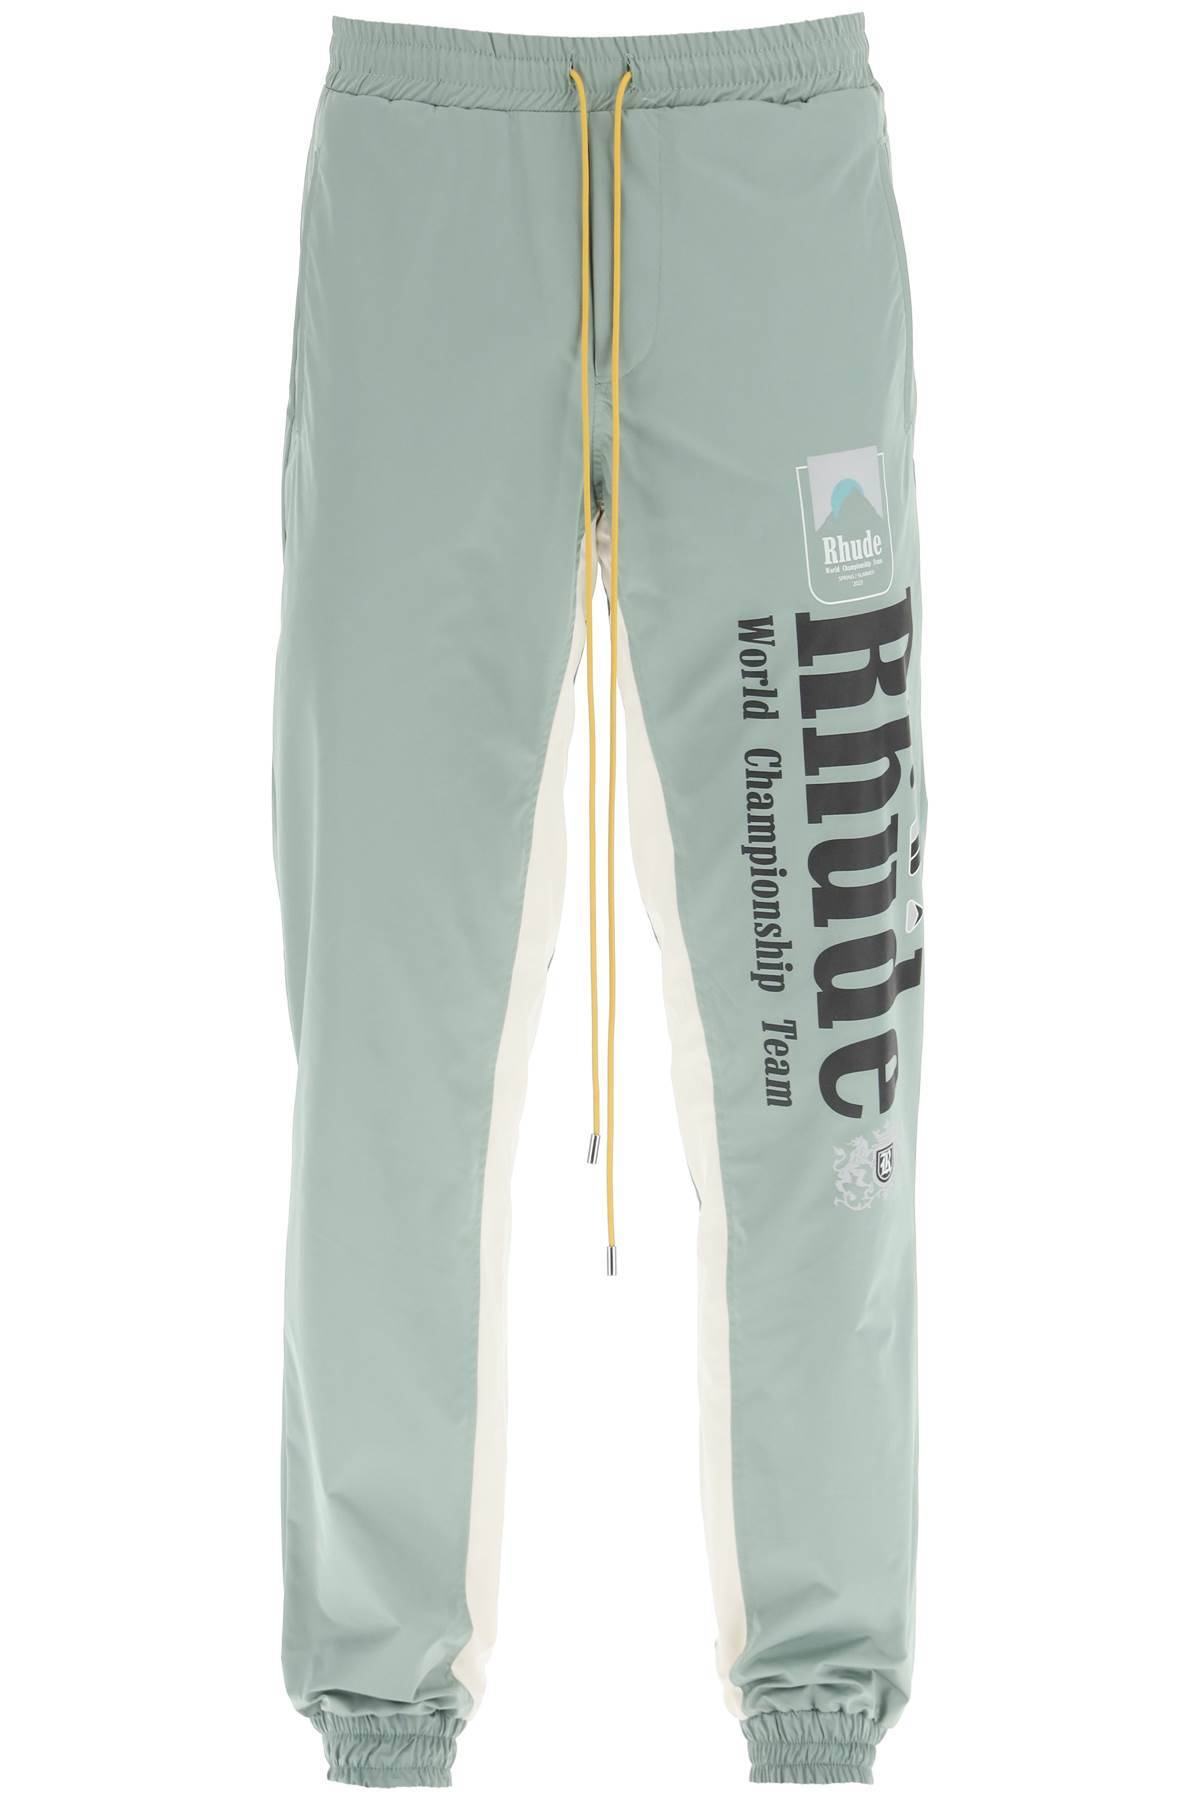 Rhude RHUDE bicolor 'senna flight' pants